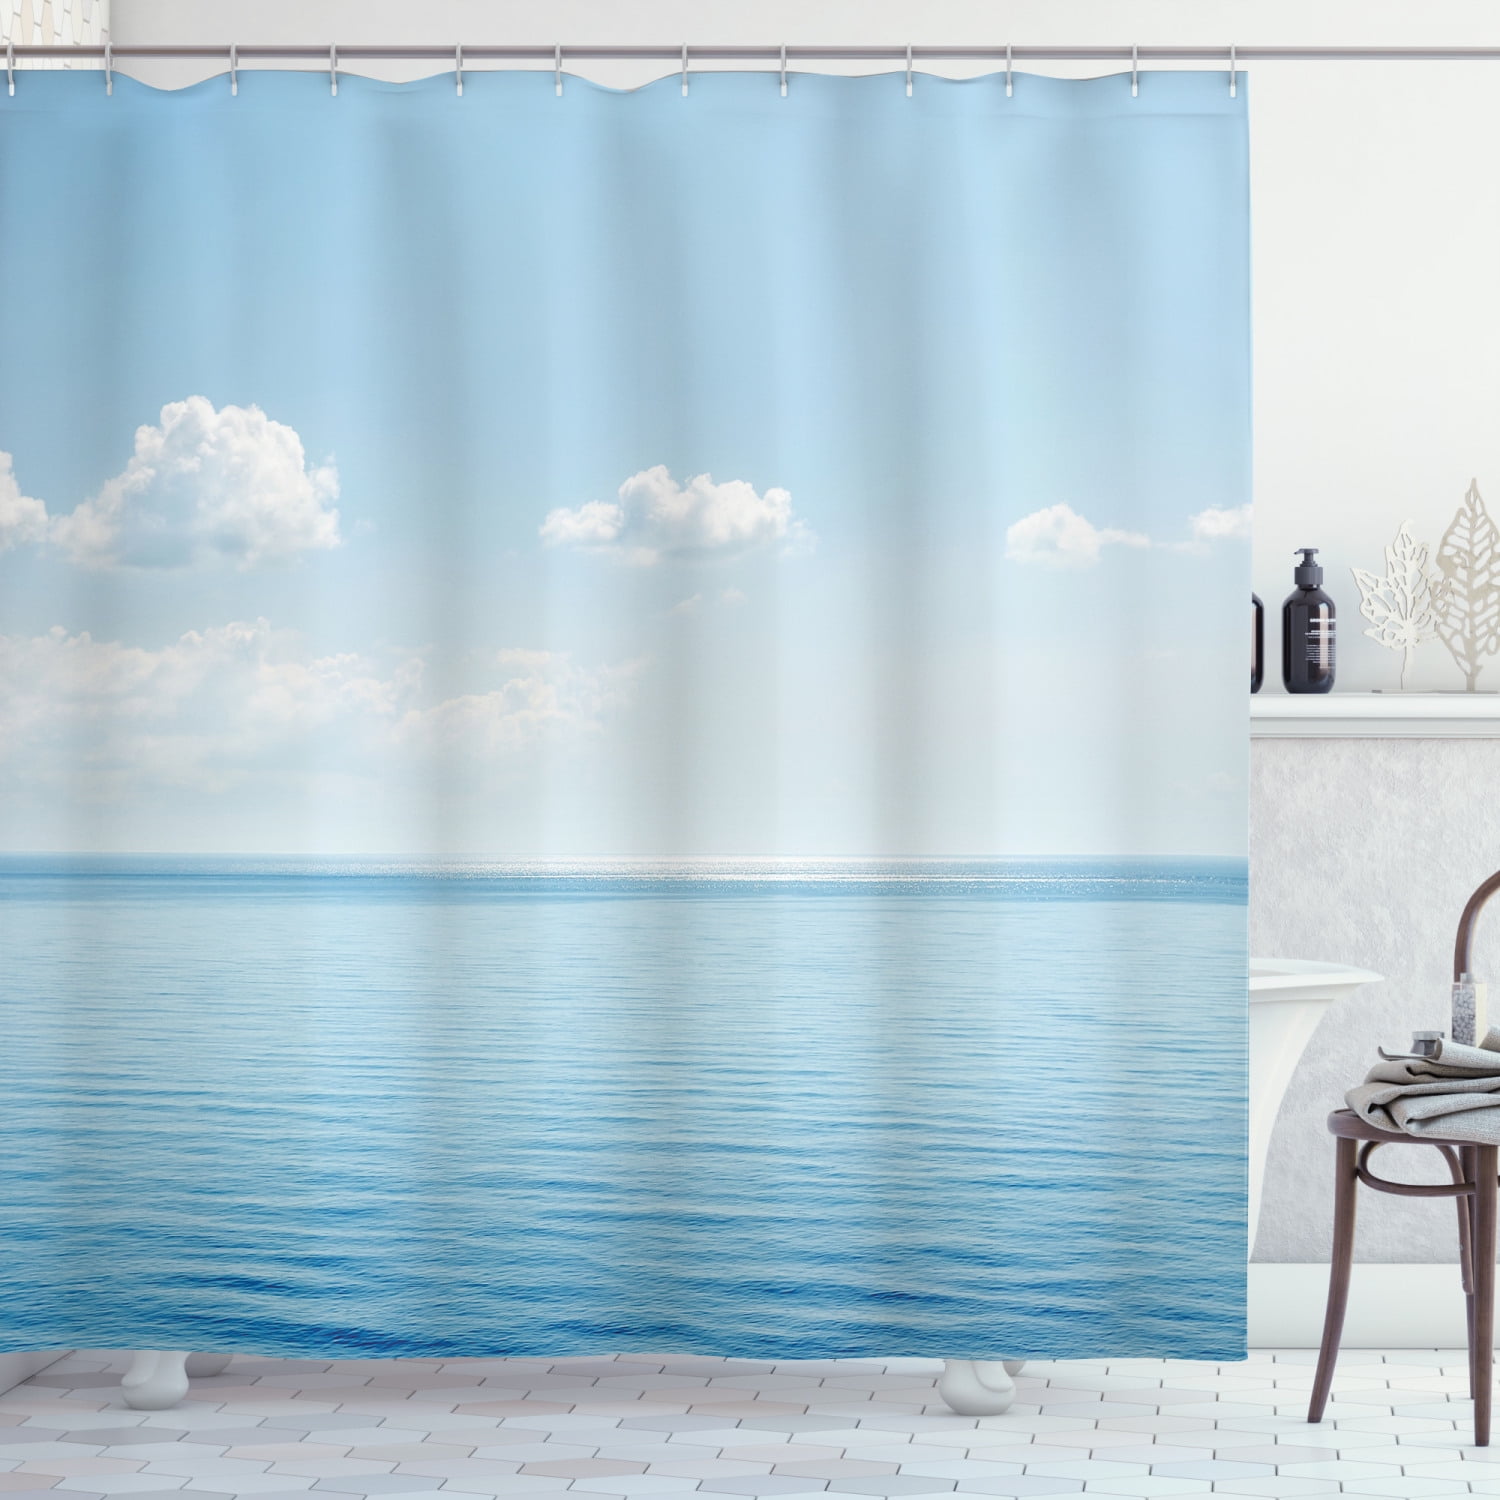 Sea Fence Waterproof Bathroom Polyester Shower Curtain Liner Water Resistant 